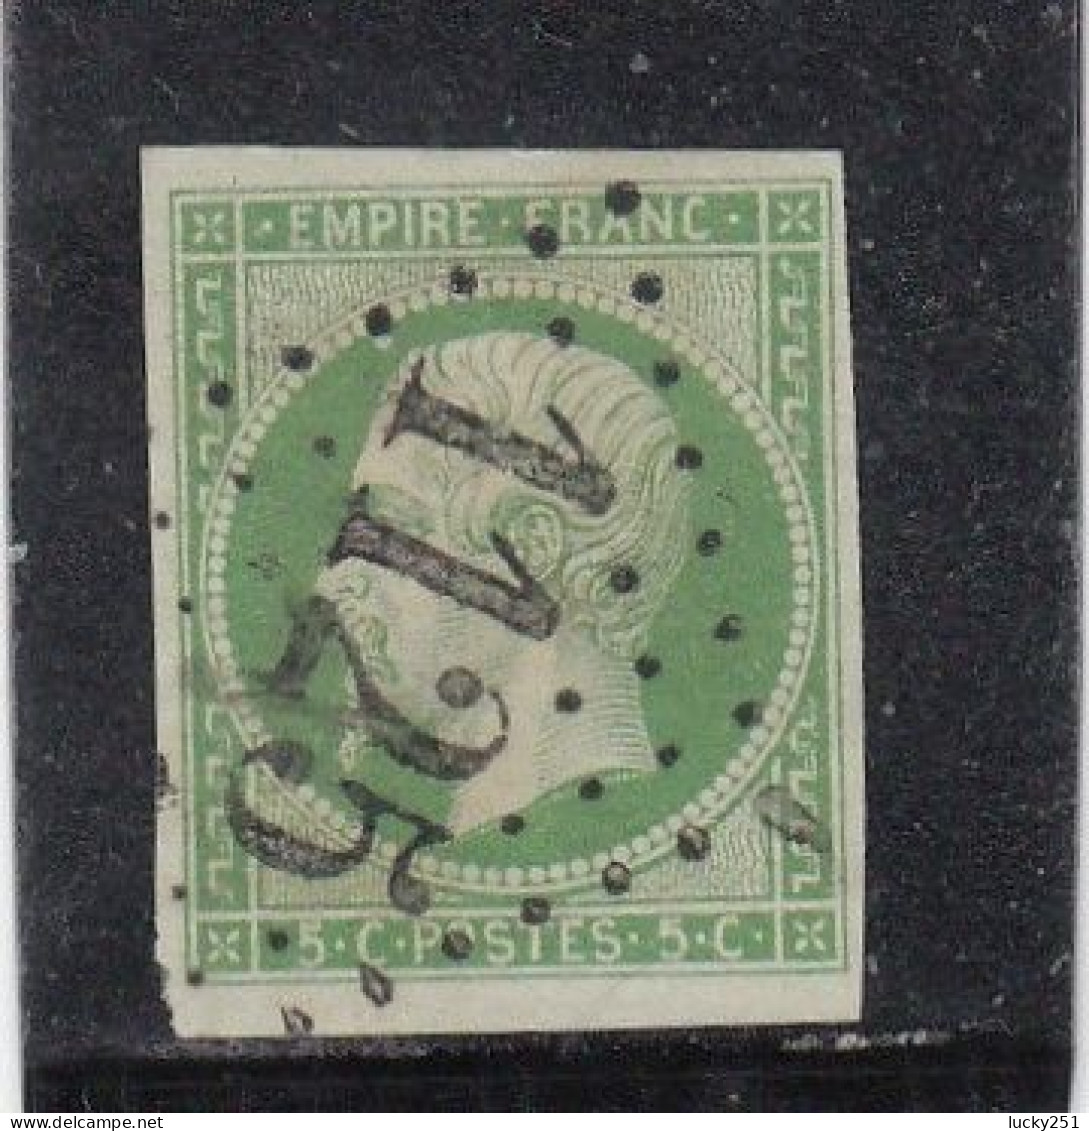 France - Année 1853-62 - N°YT N° 12 - 5c Vert - Empire - Oblitération GC - 1853-1860 Napoléon III